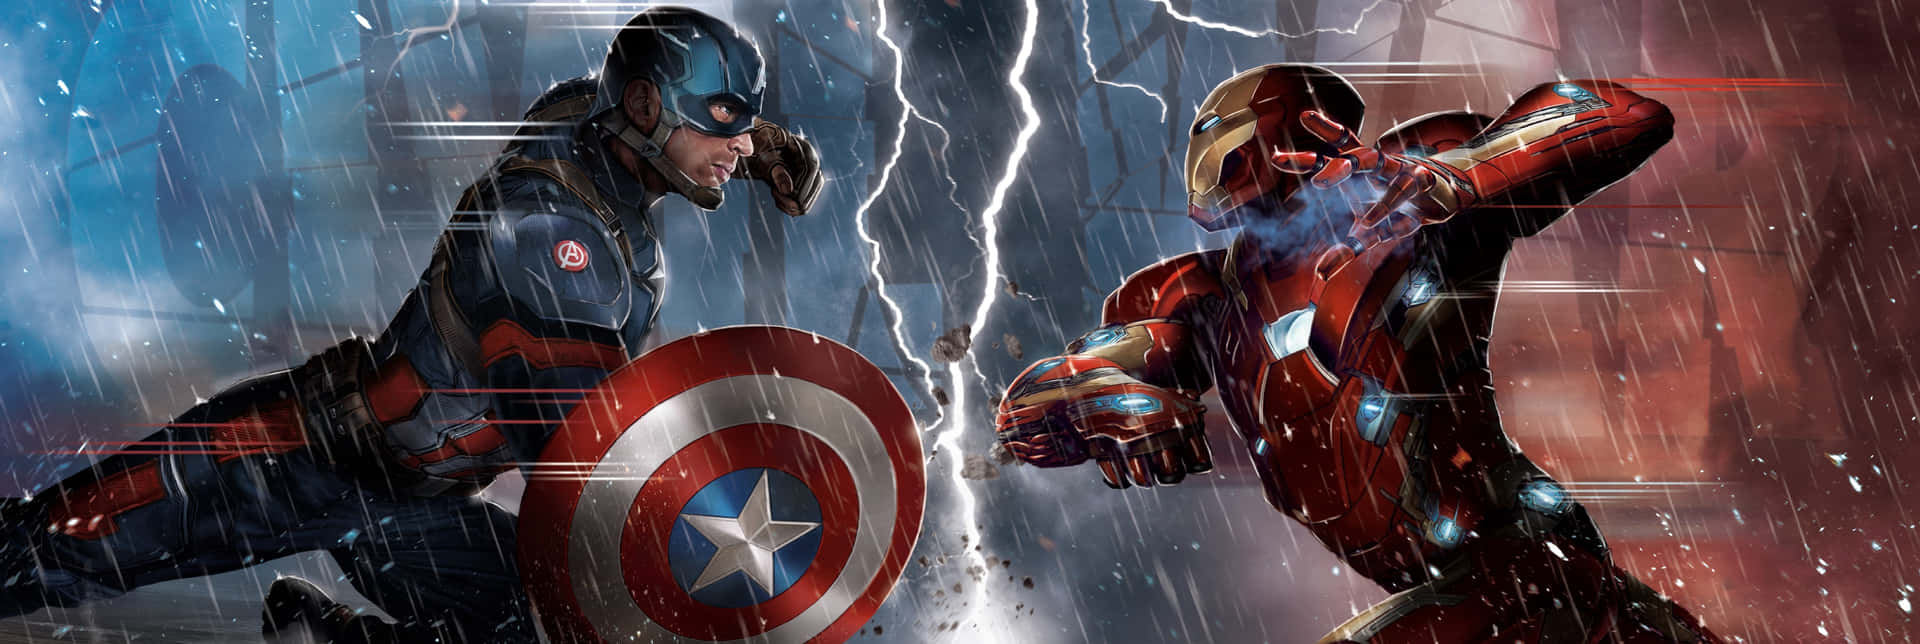 Bringensie Action Ins Spiel Mit Dem Captain America Dual-screen Wallpaper